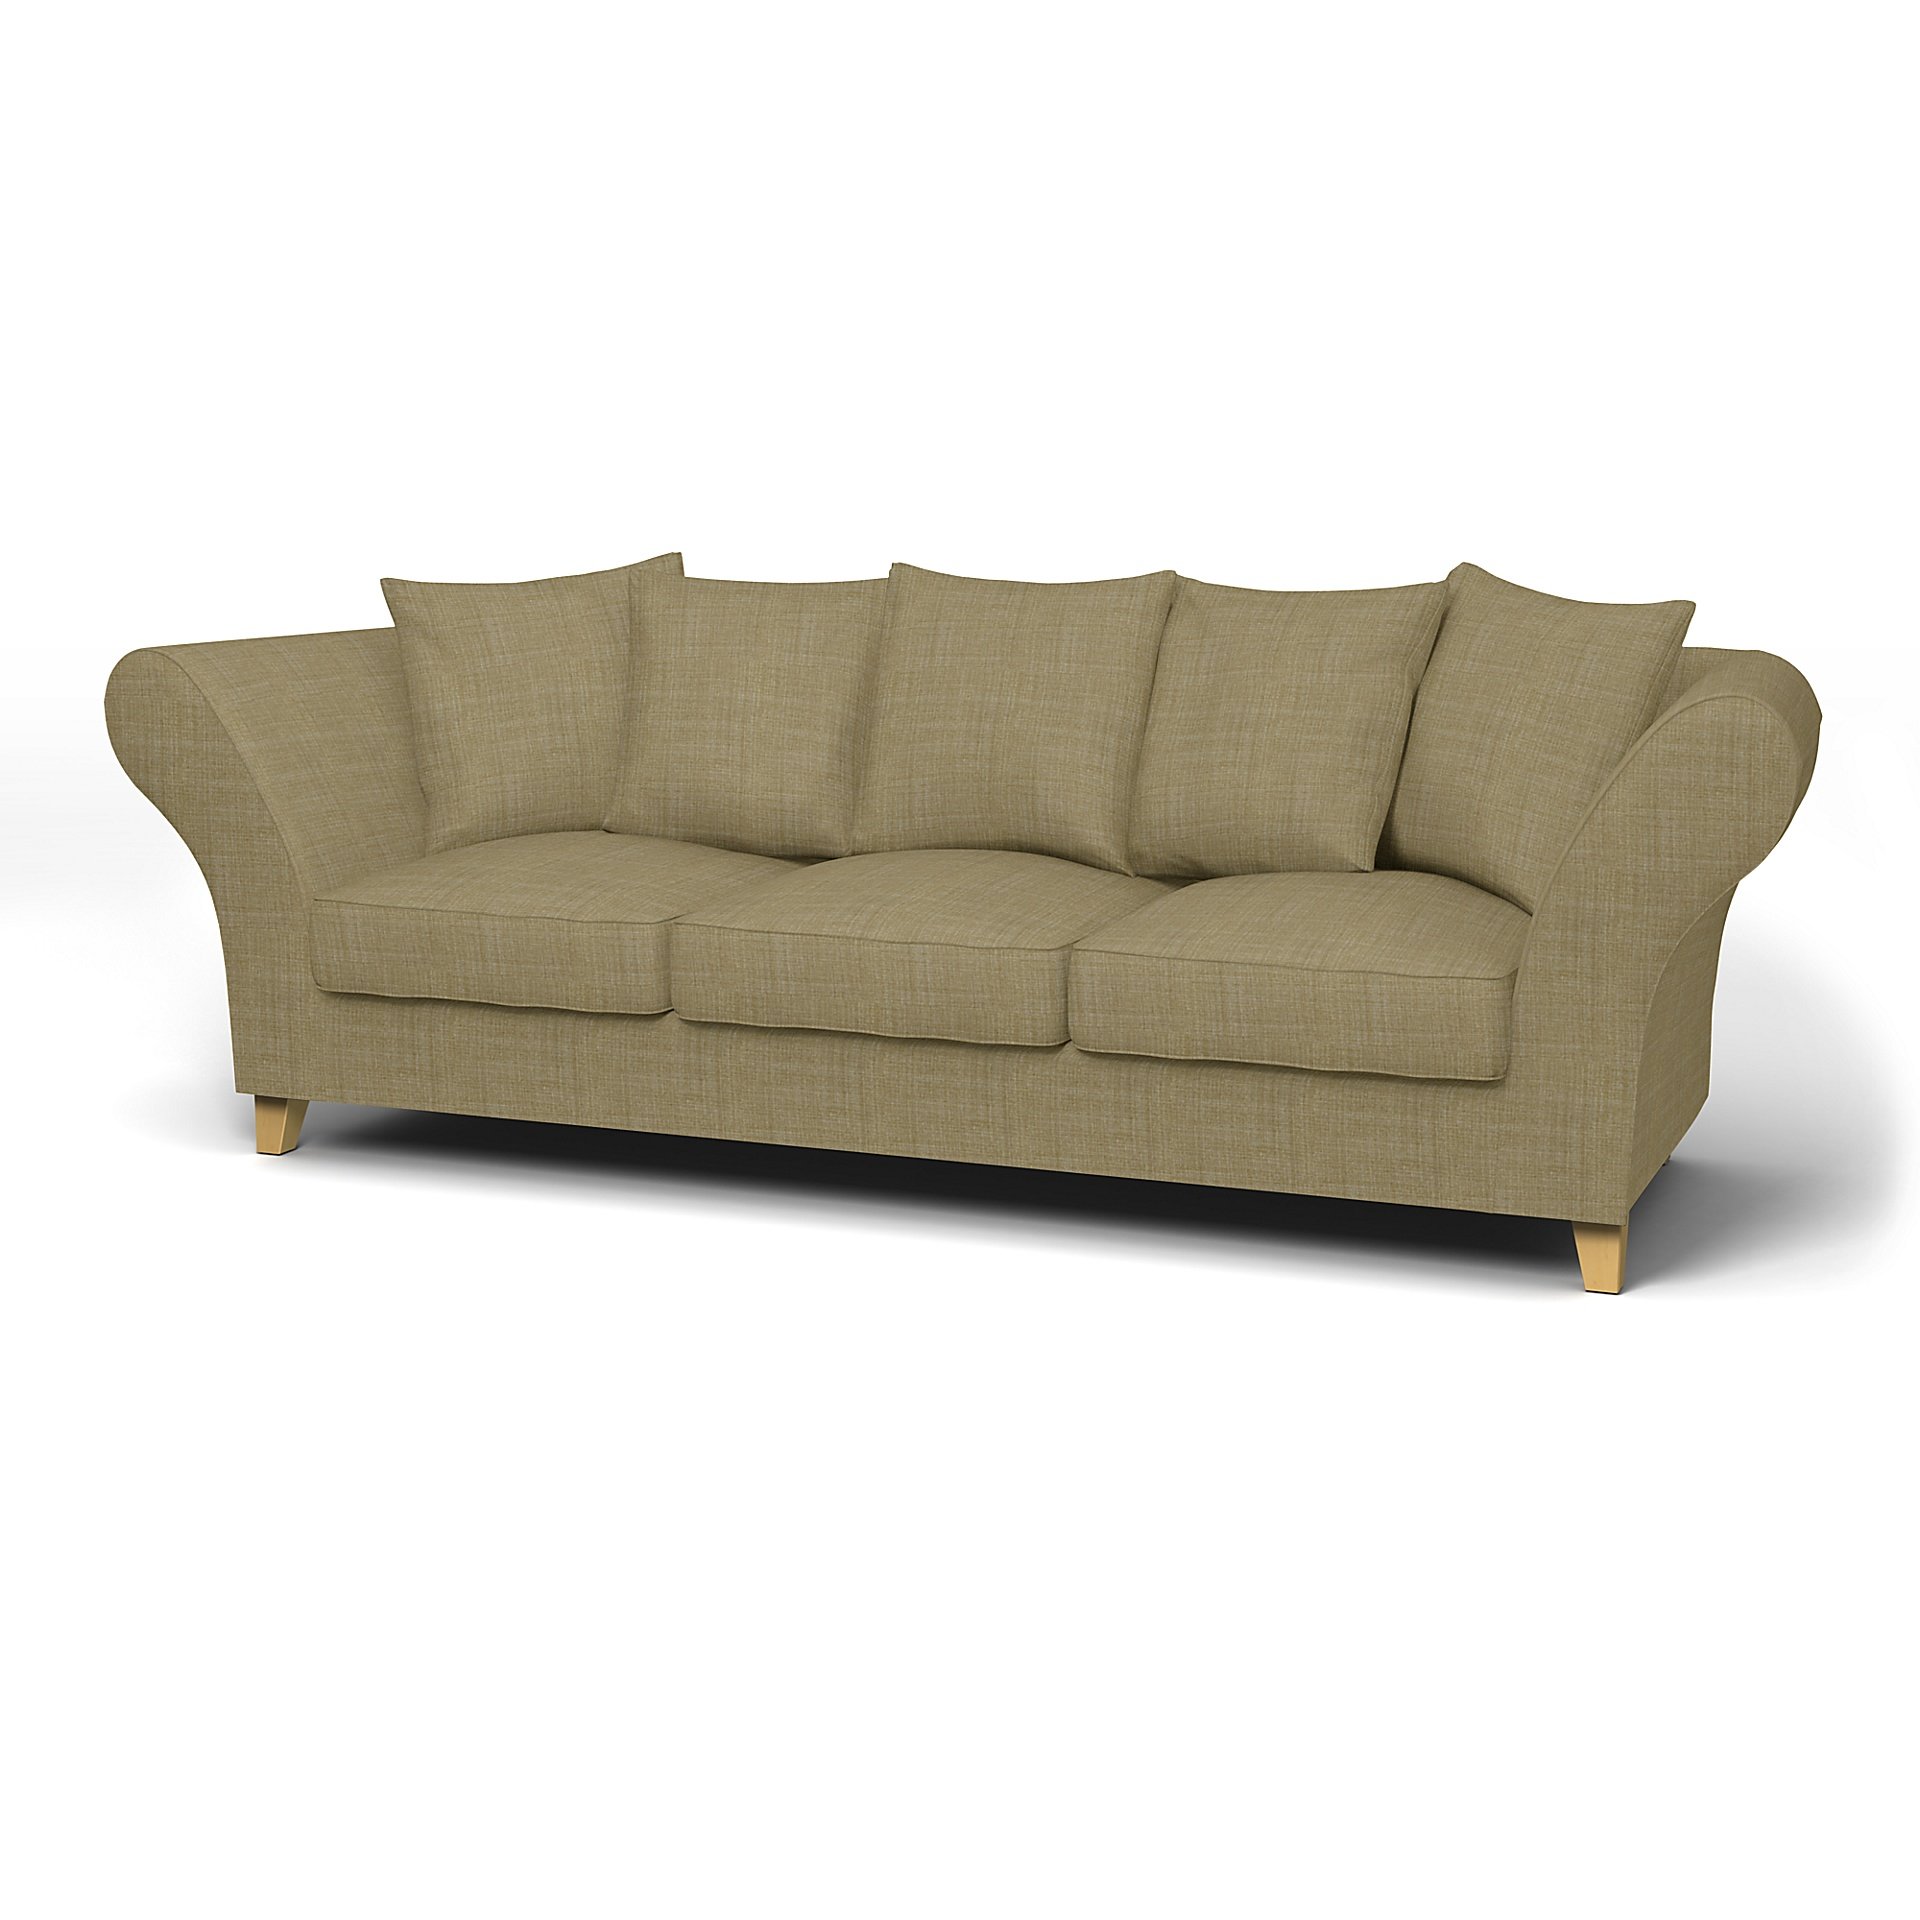 IKEA - Backa 3.5 Seater Sofa Cover, Dusty Yellow, Boucle & Texture - Bemz